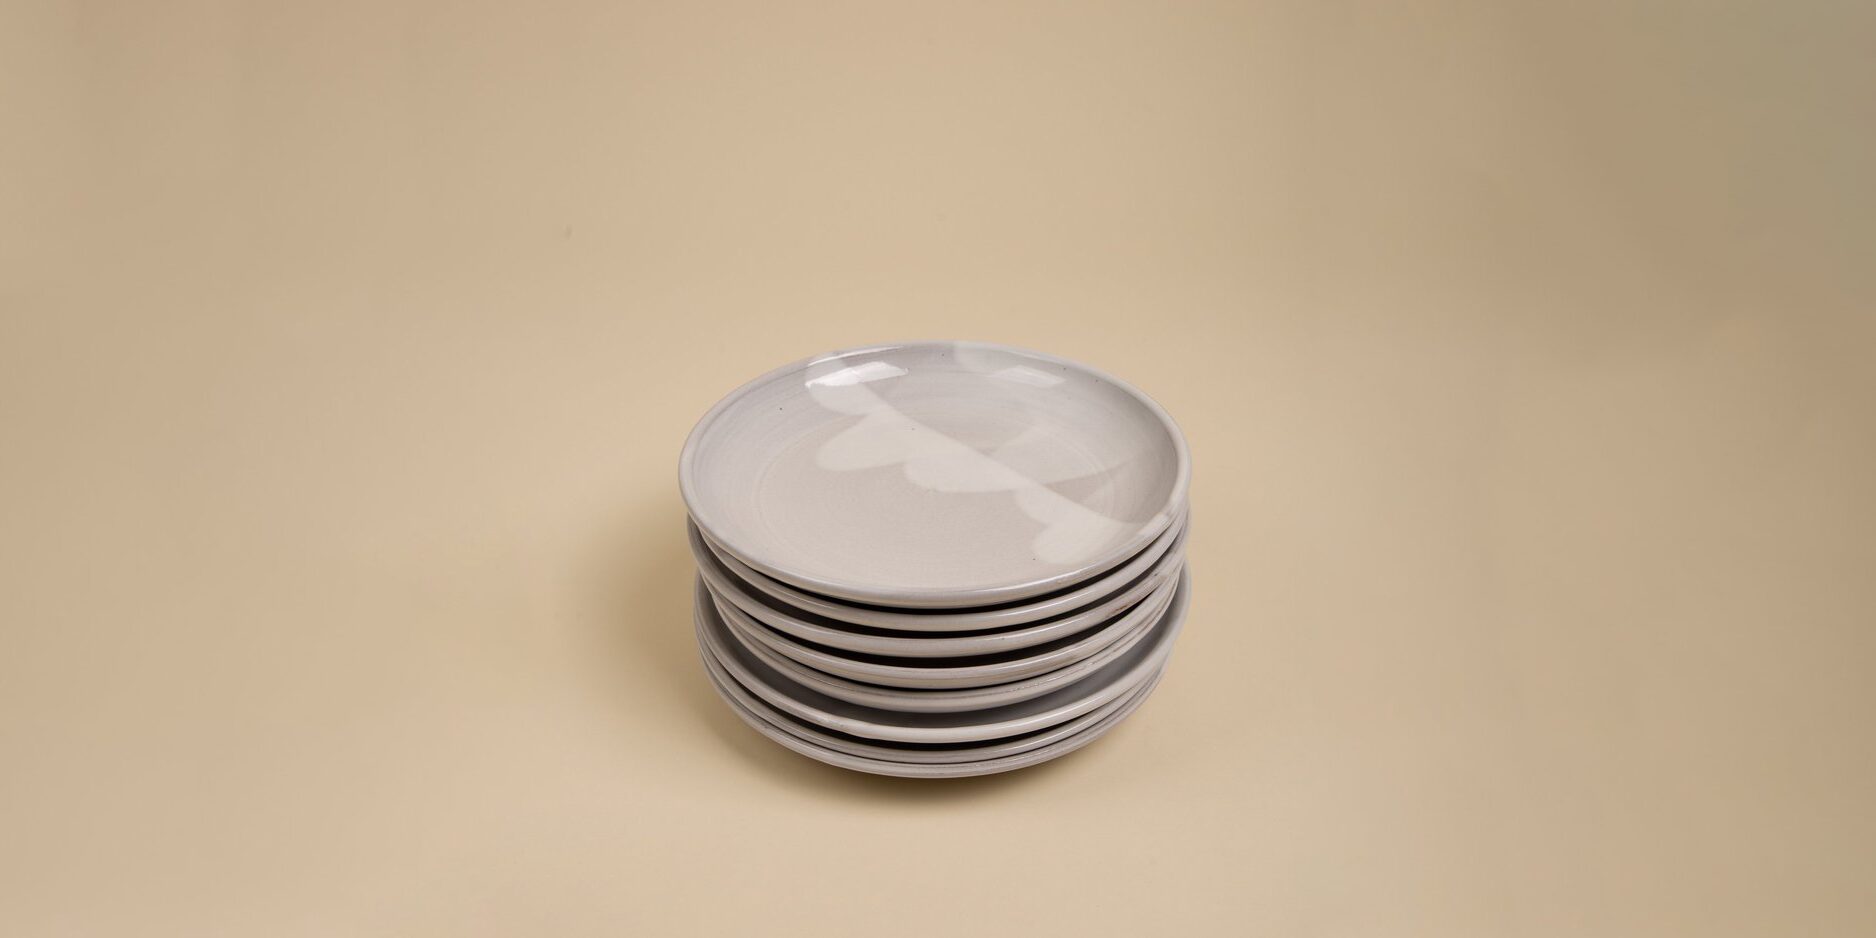 Ceramic plates created by Molly Svoboda of Boda Clay Studio in Dutchtown, St. Louis, MO.